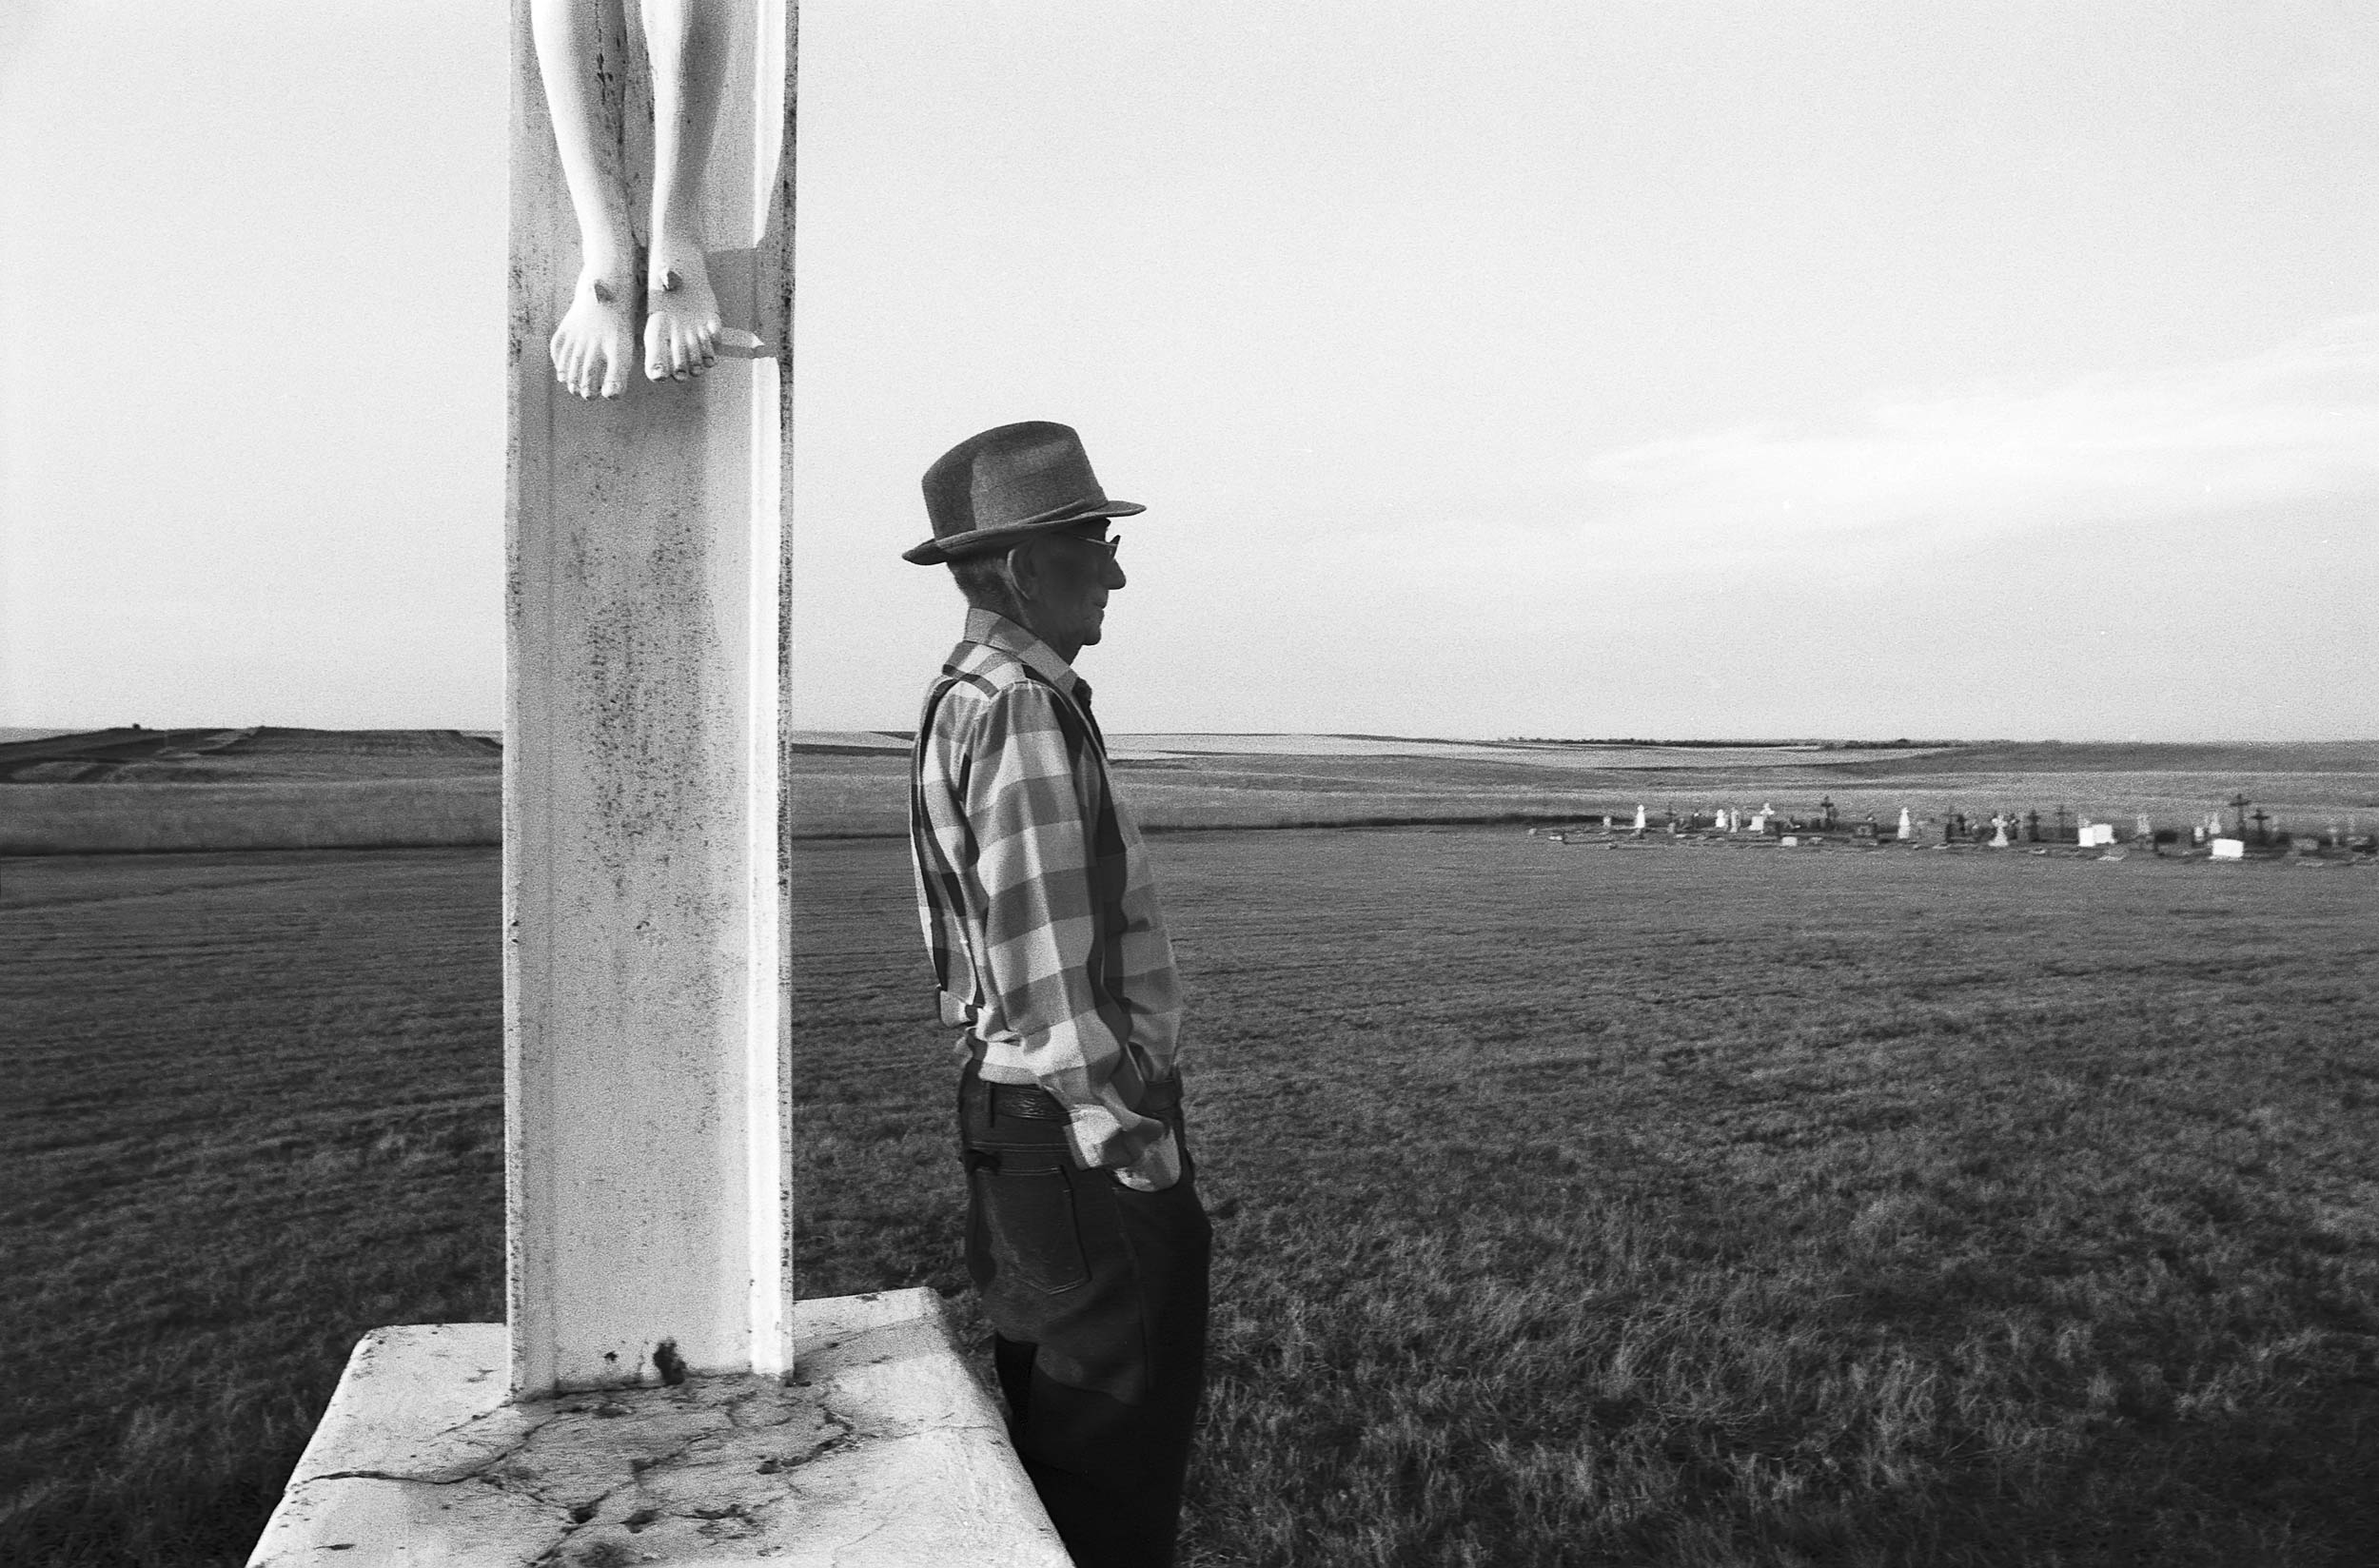 A photo taken in western North Dakota by North Dakota photographer Dan Koeck.